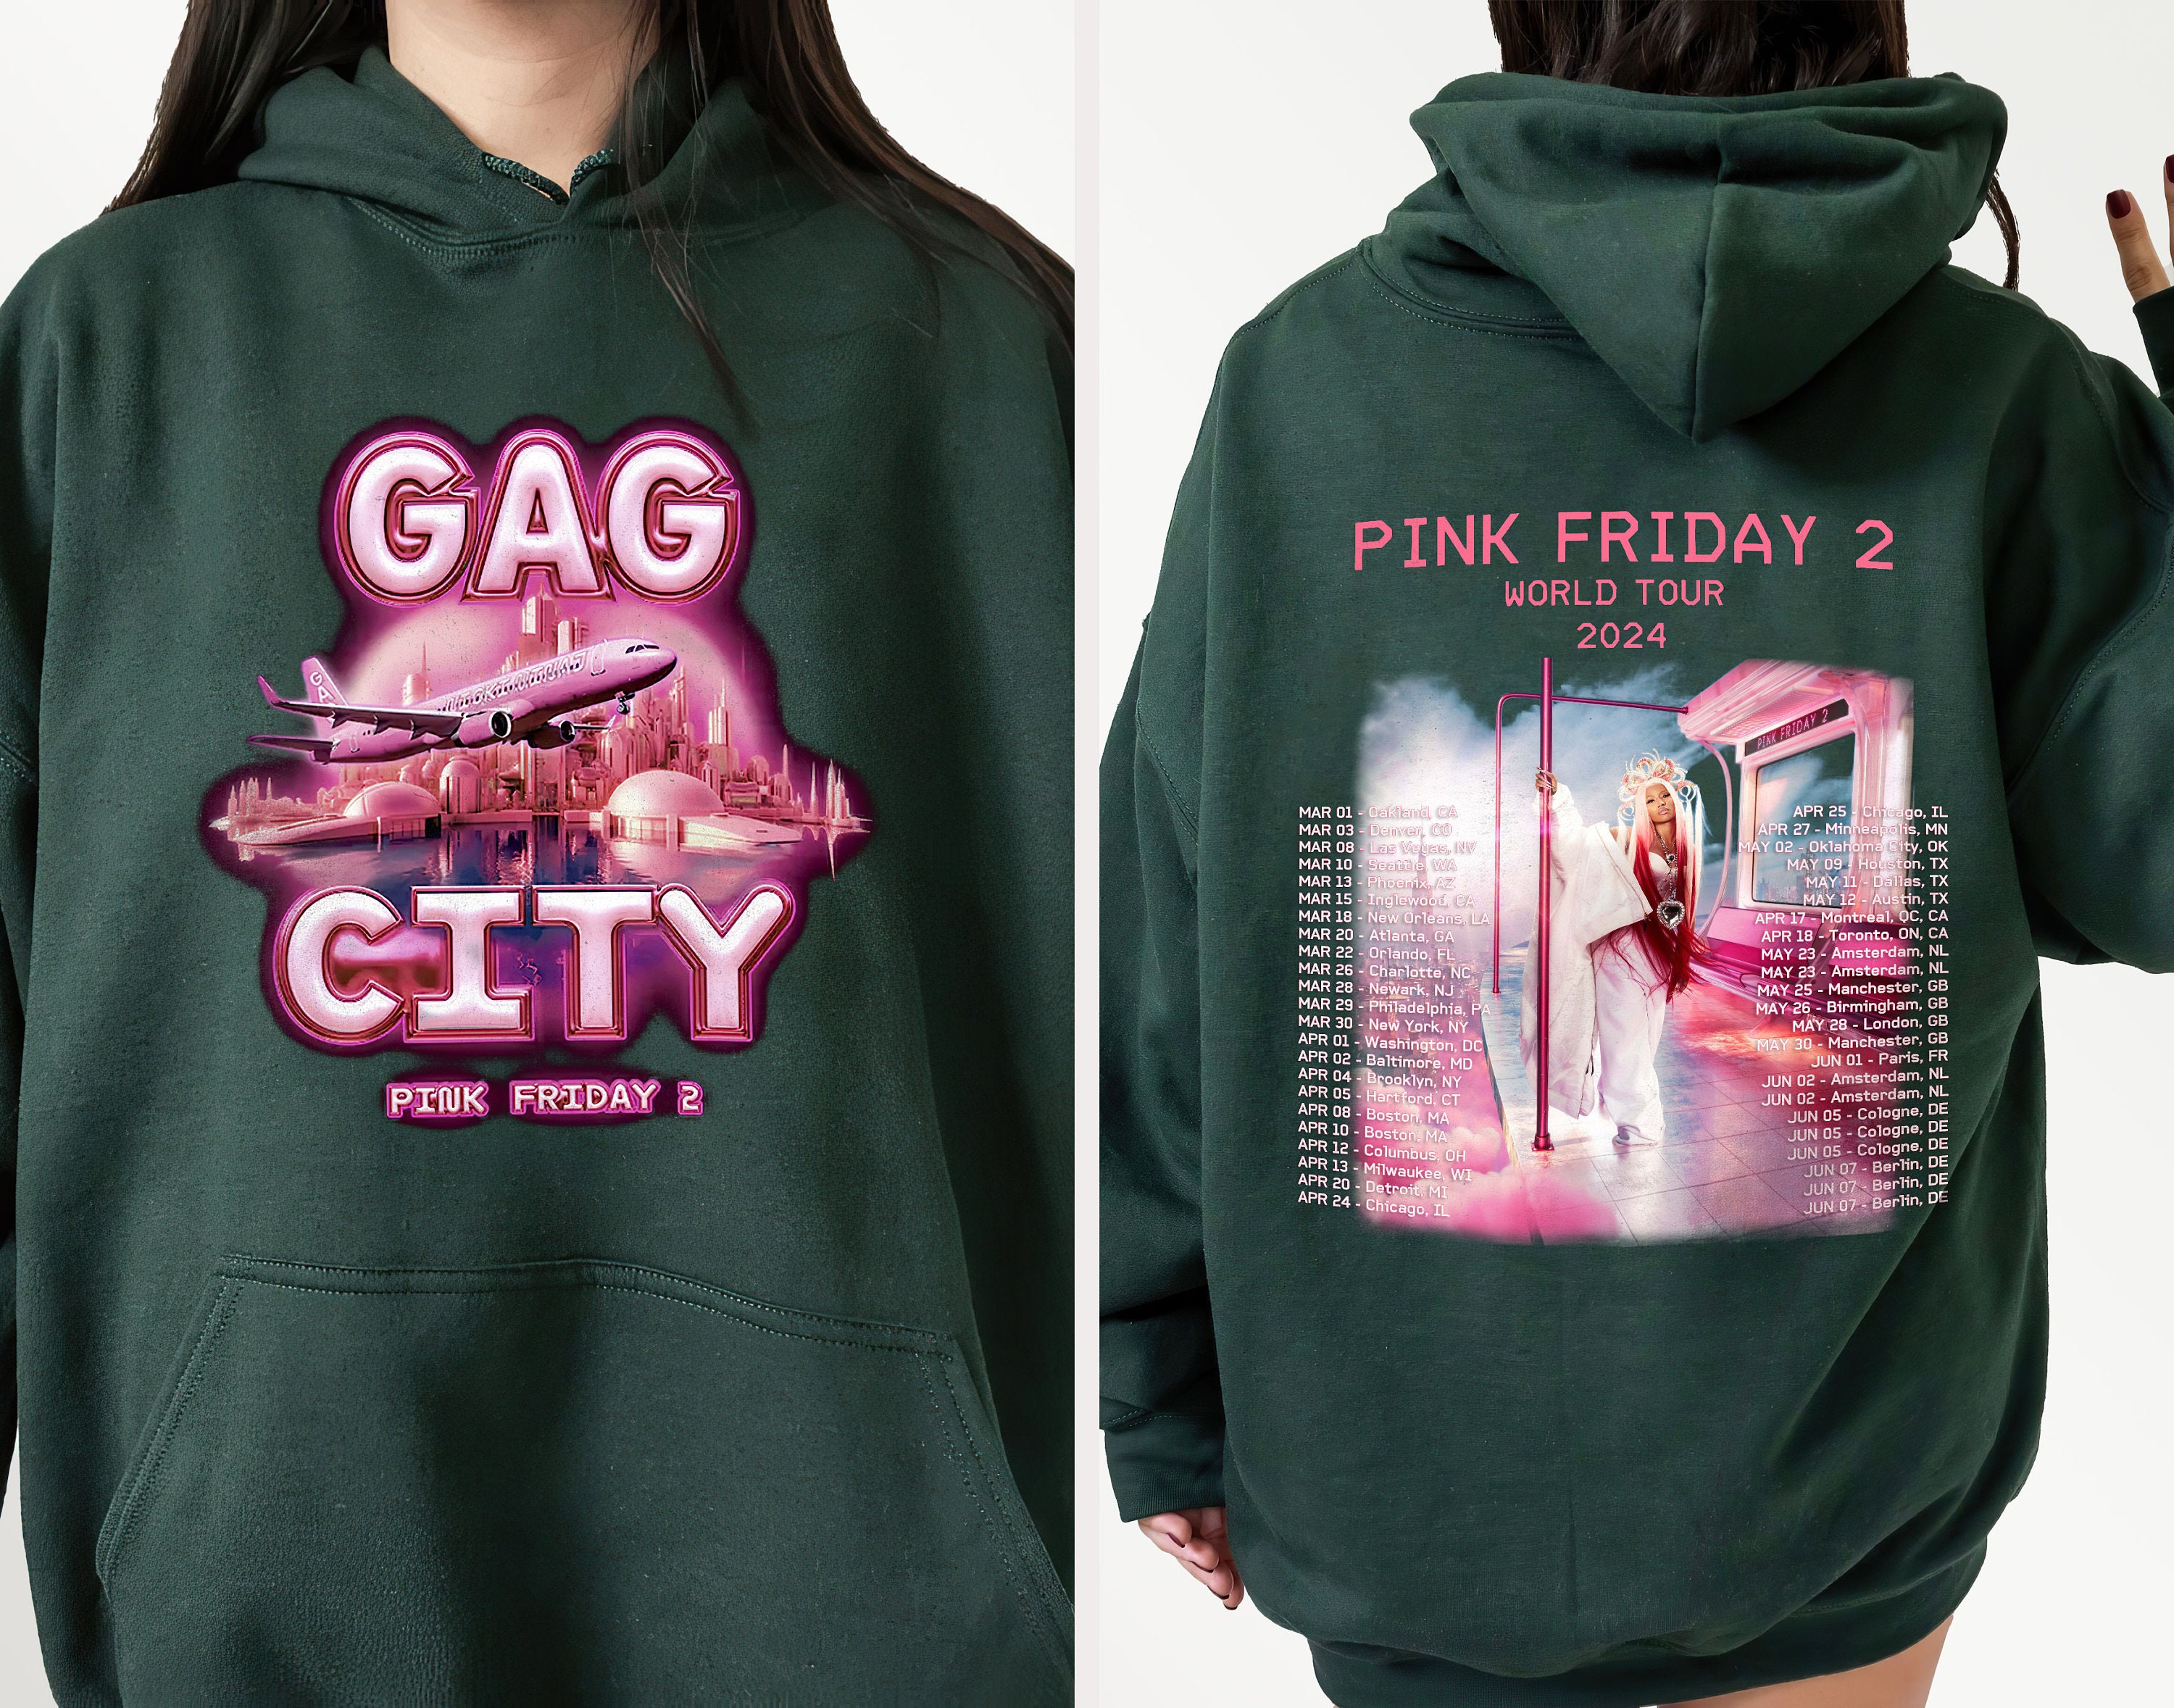 Nicki Minaj Pink Friday 2 Tour Shirt, Gag City Shirt, Nicki Minaj World Tour Shirt